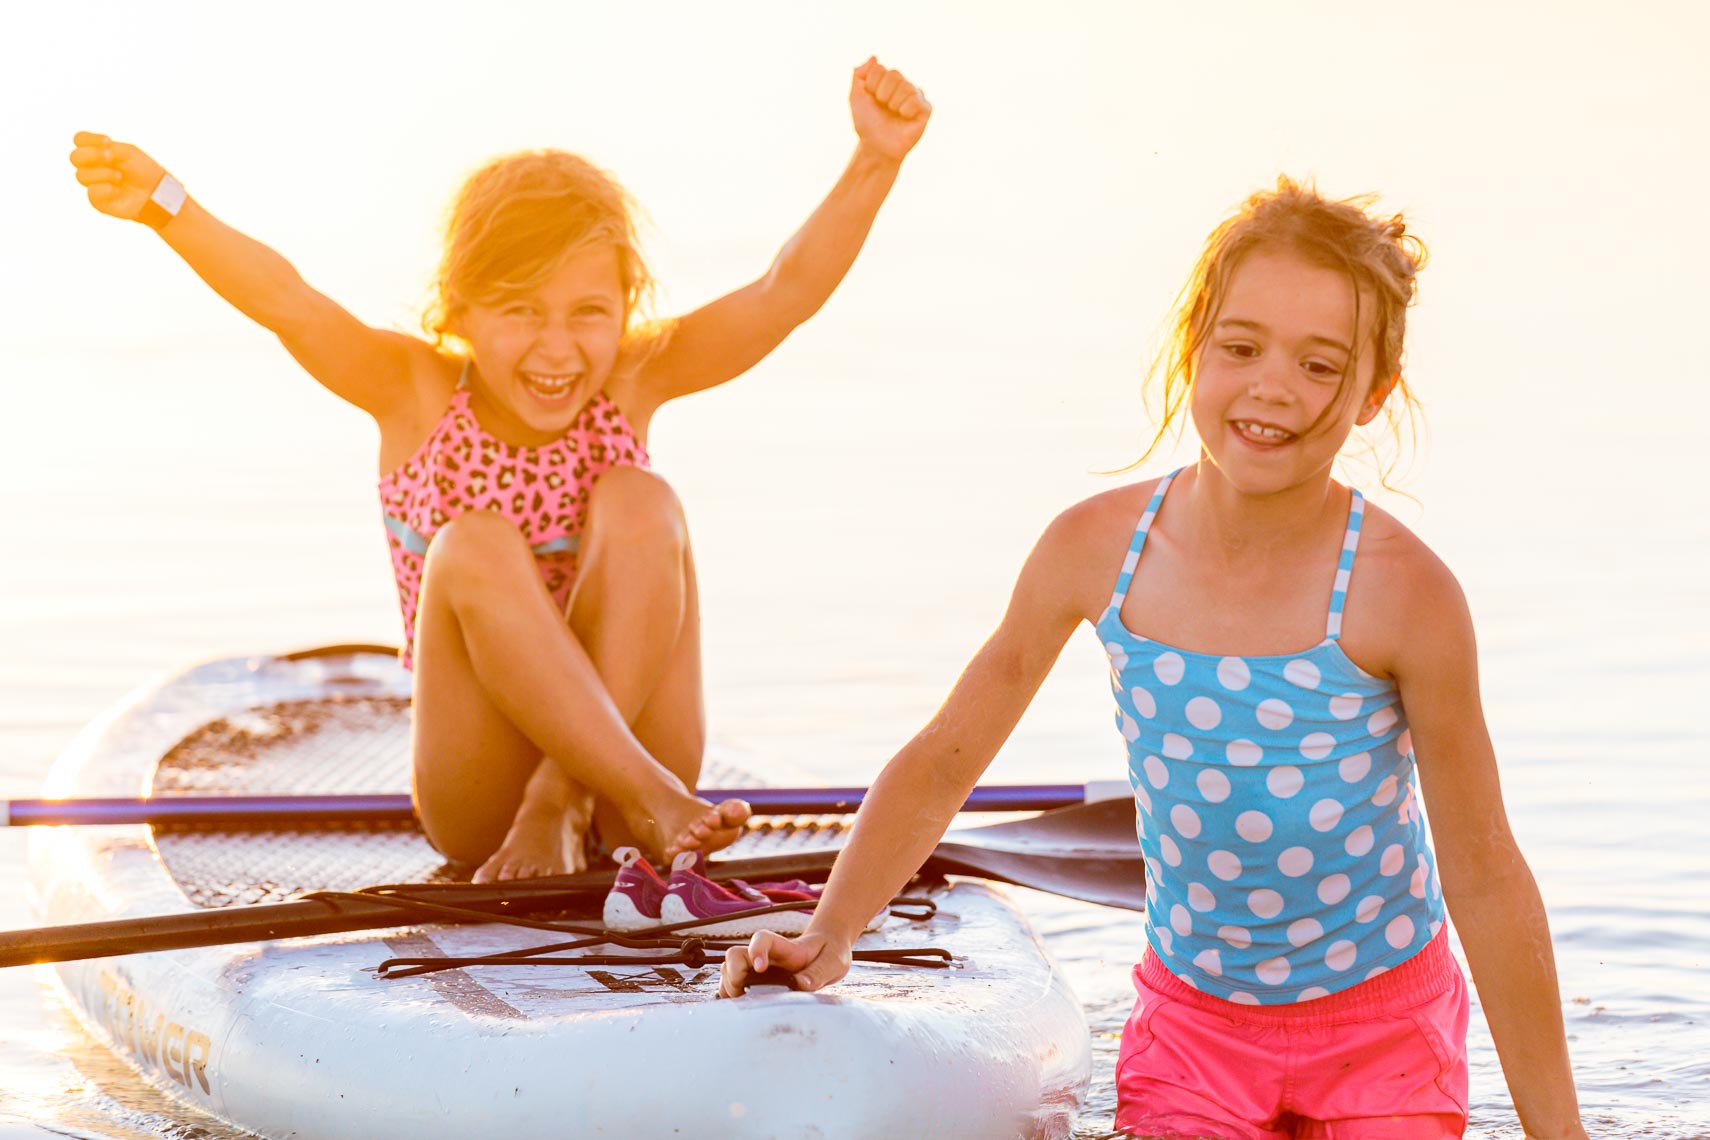 Joyful Young Girls on Paddle Board | Michael DeYoung